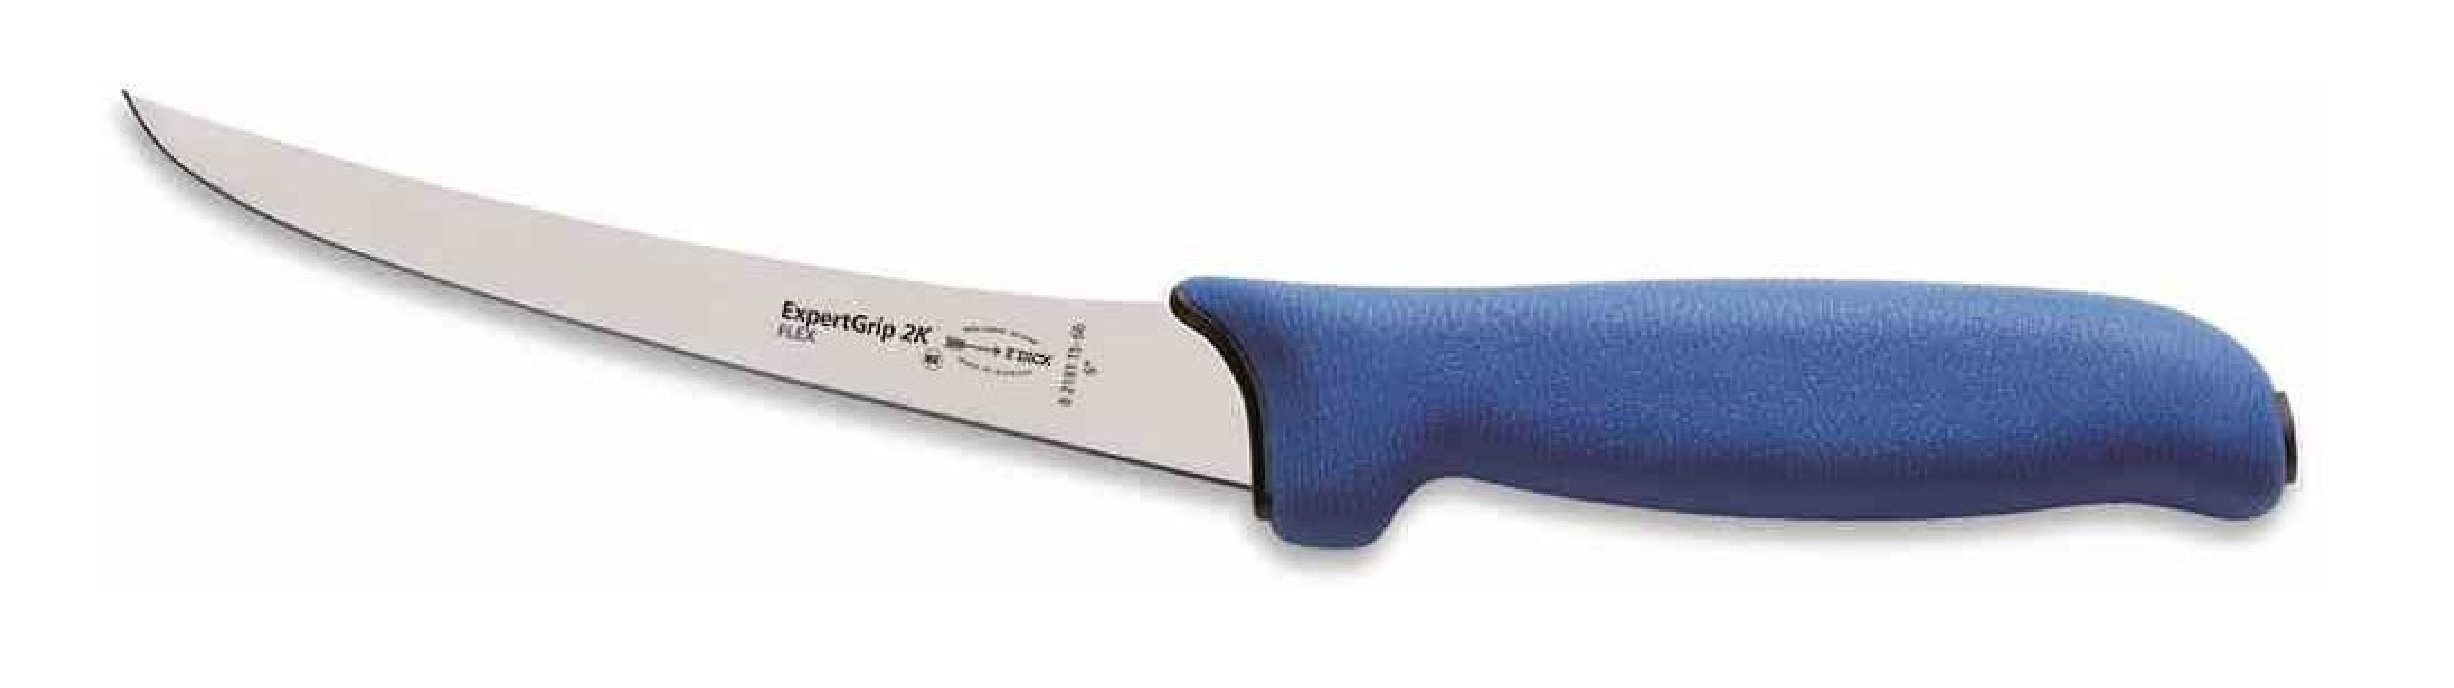 Dick Ausbeinmesser Dick Ausbeinmesser 8218113 Expert Grip 2K Messer Klinge 13 cm blau